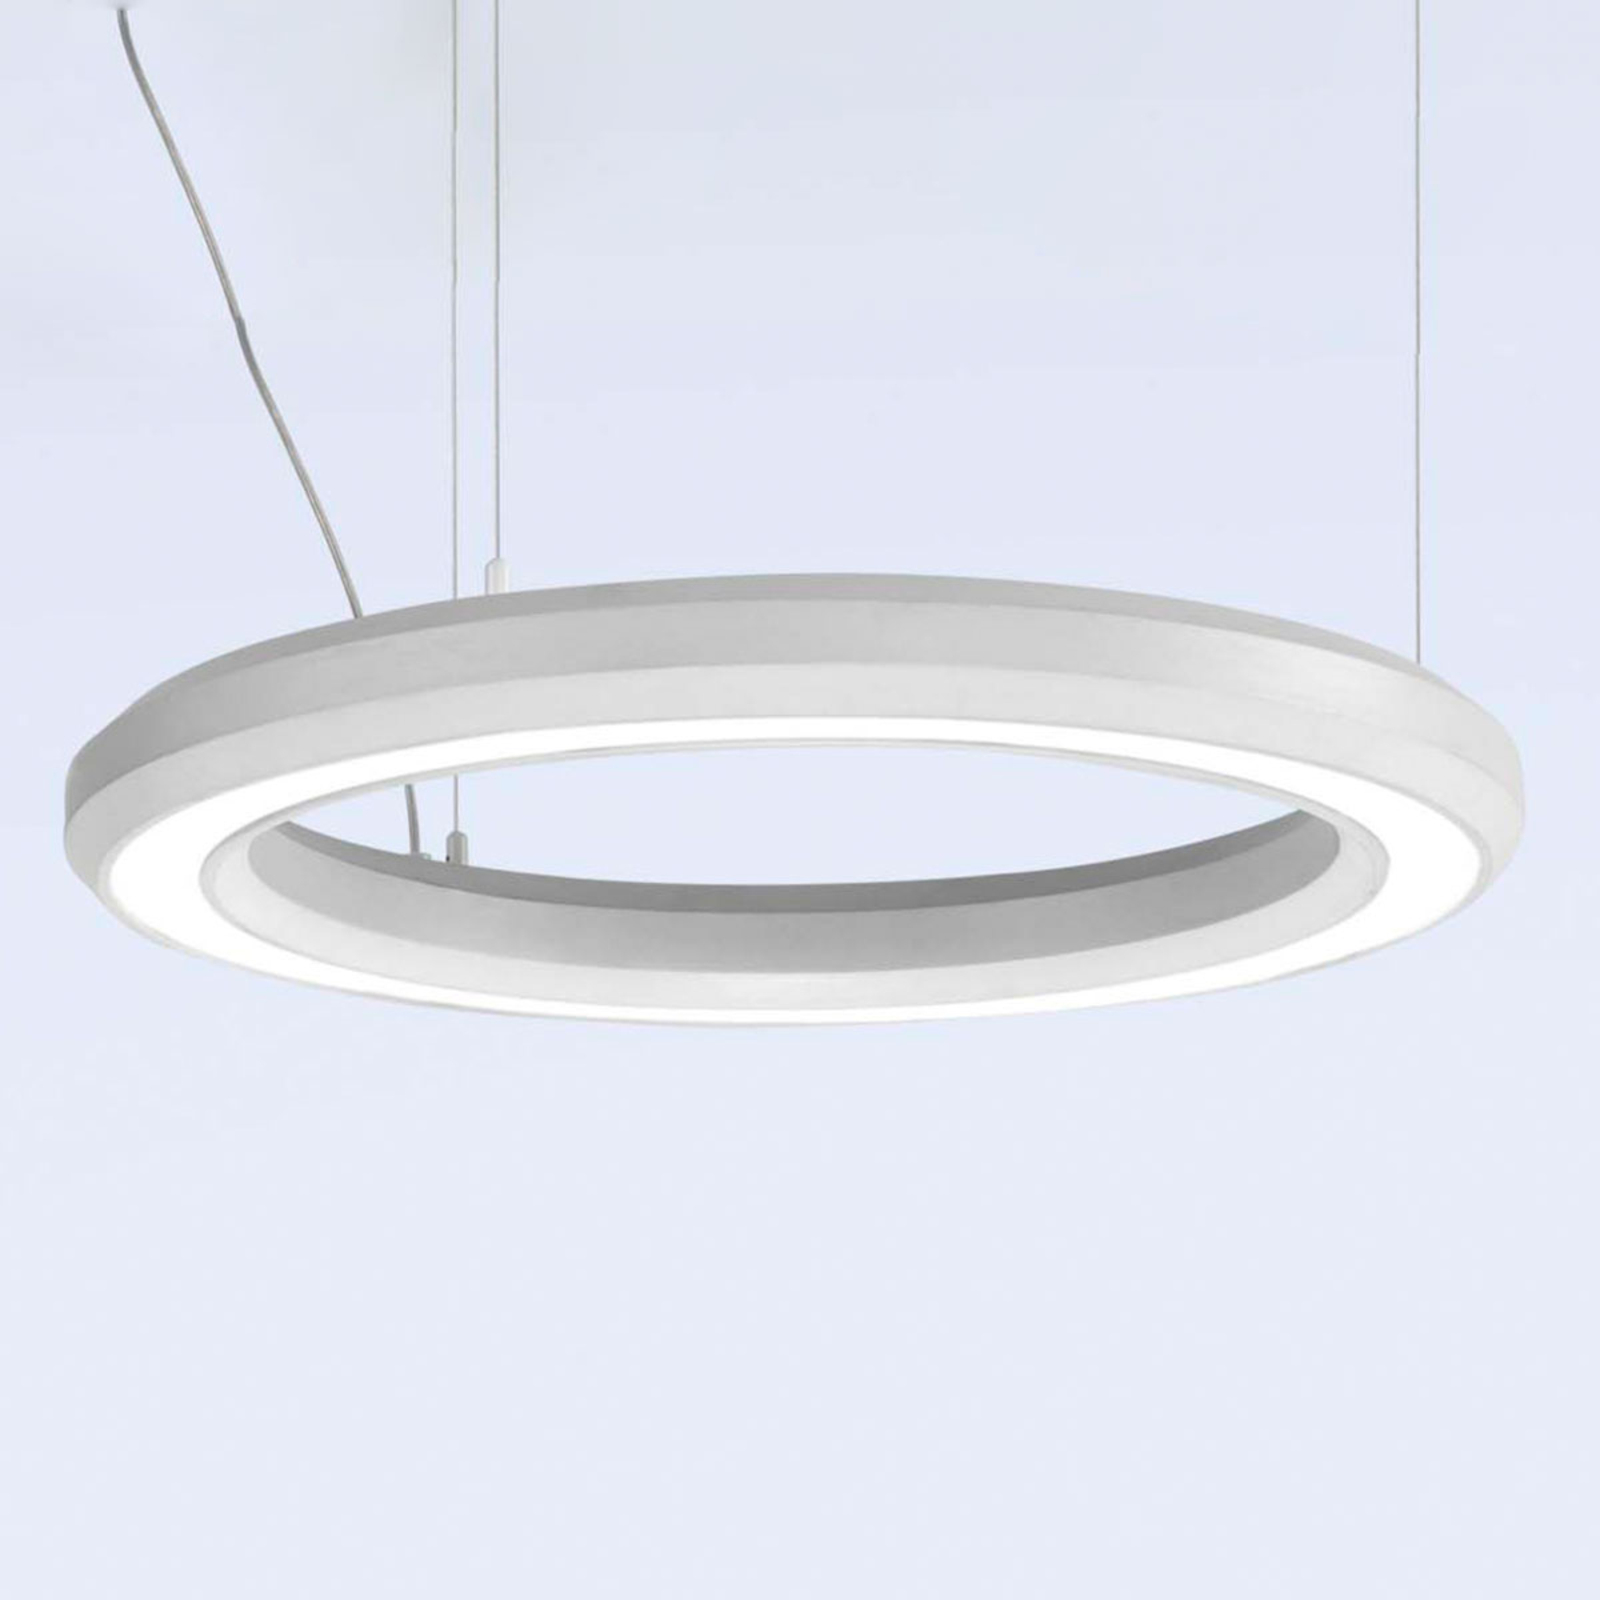 Lampa wisząca LED Materica dolna Ø 60cm biała